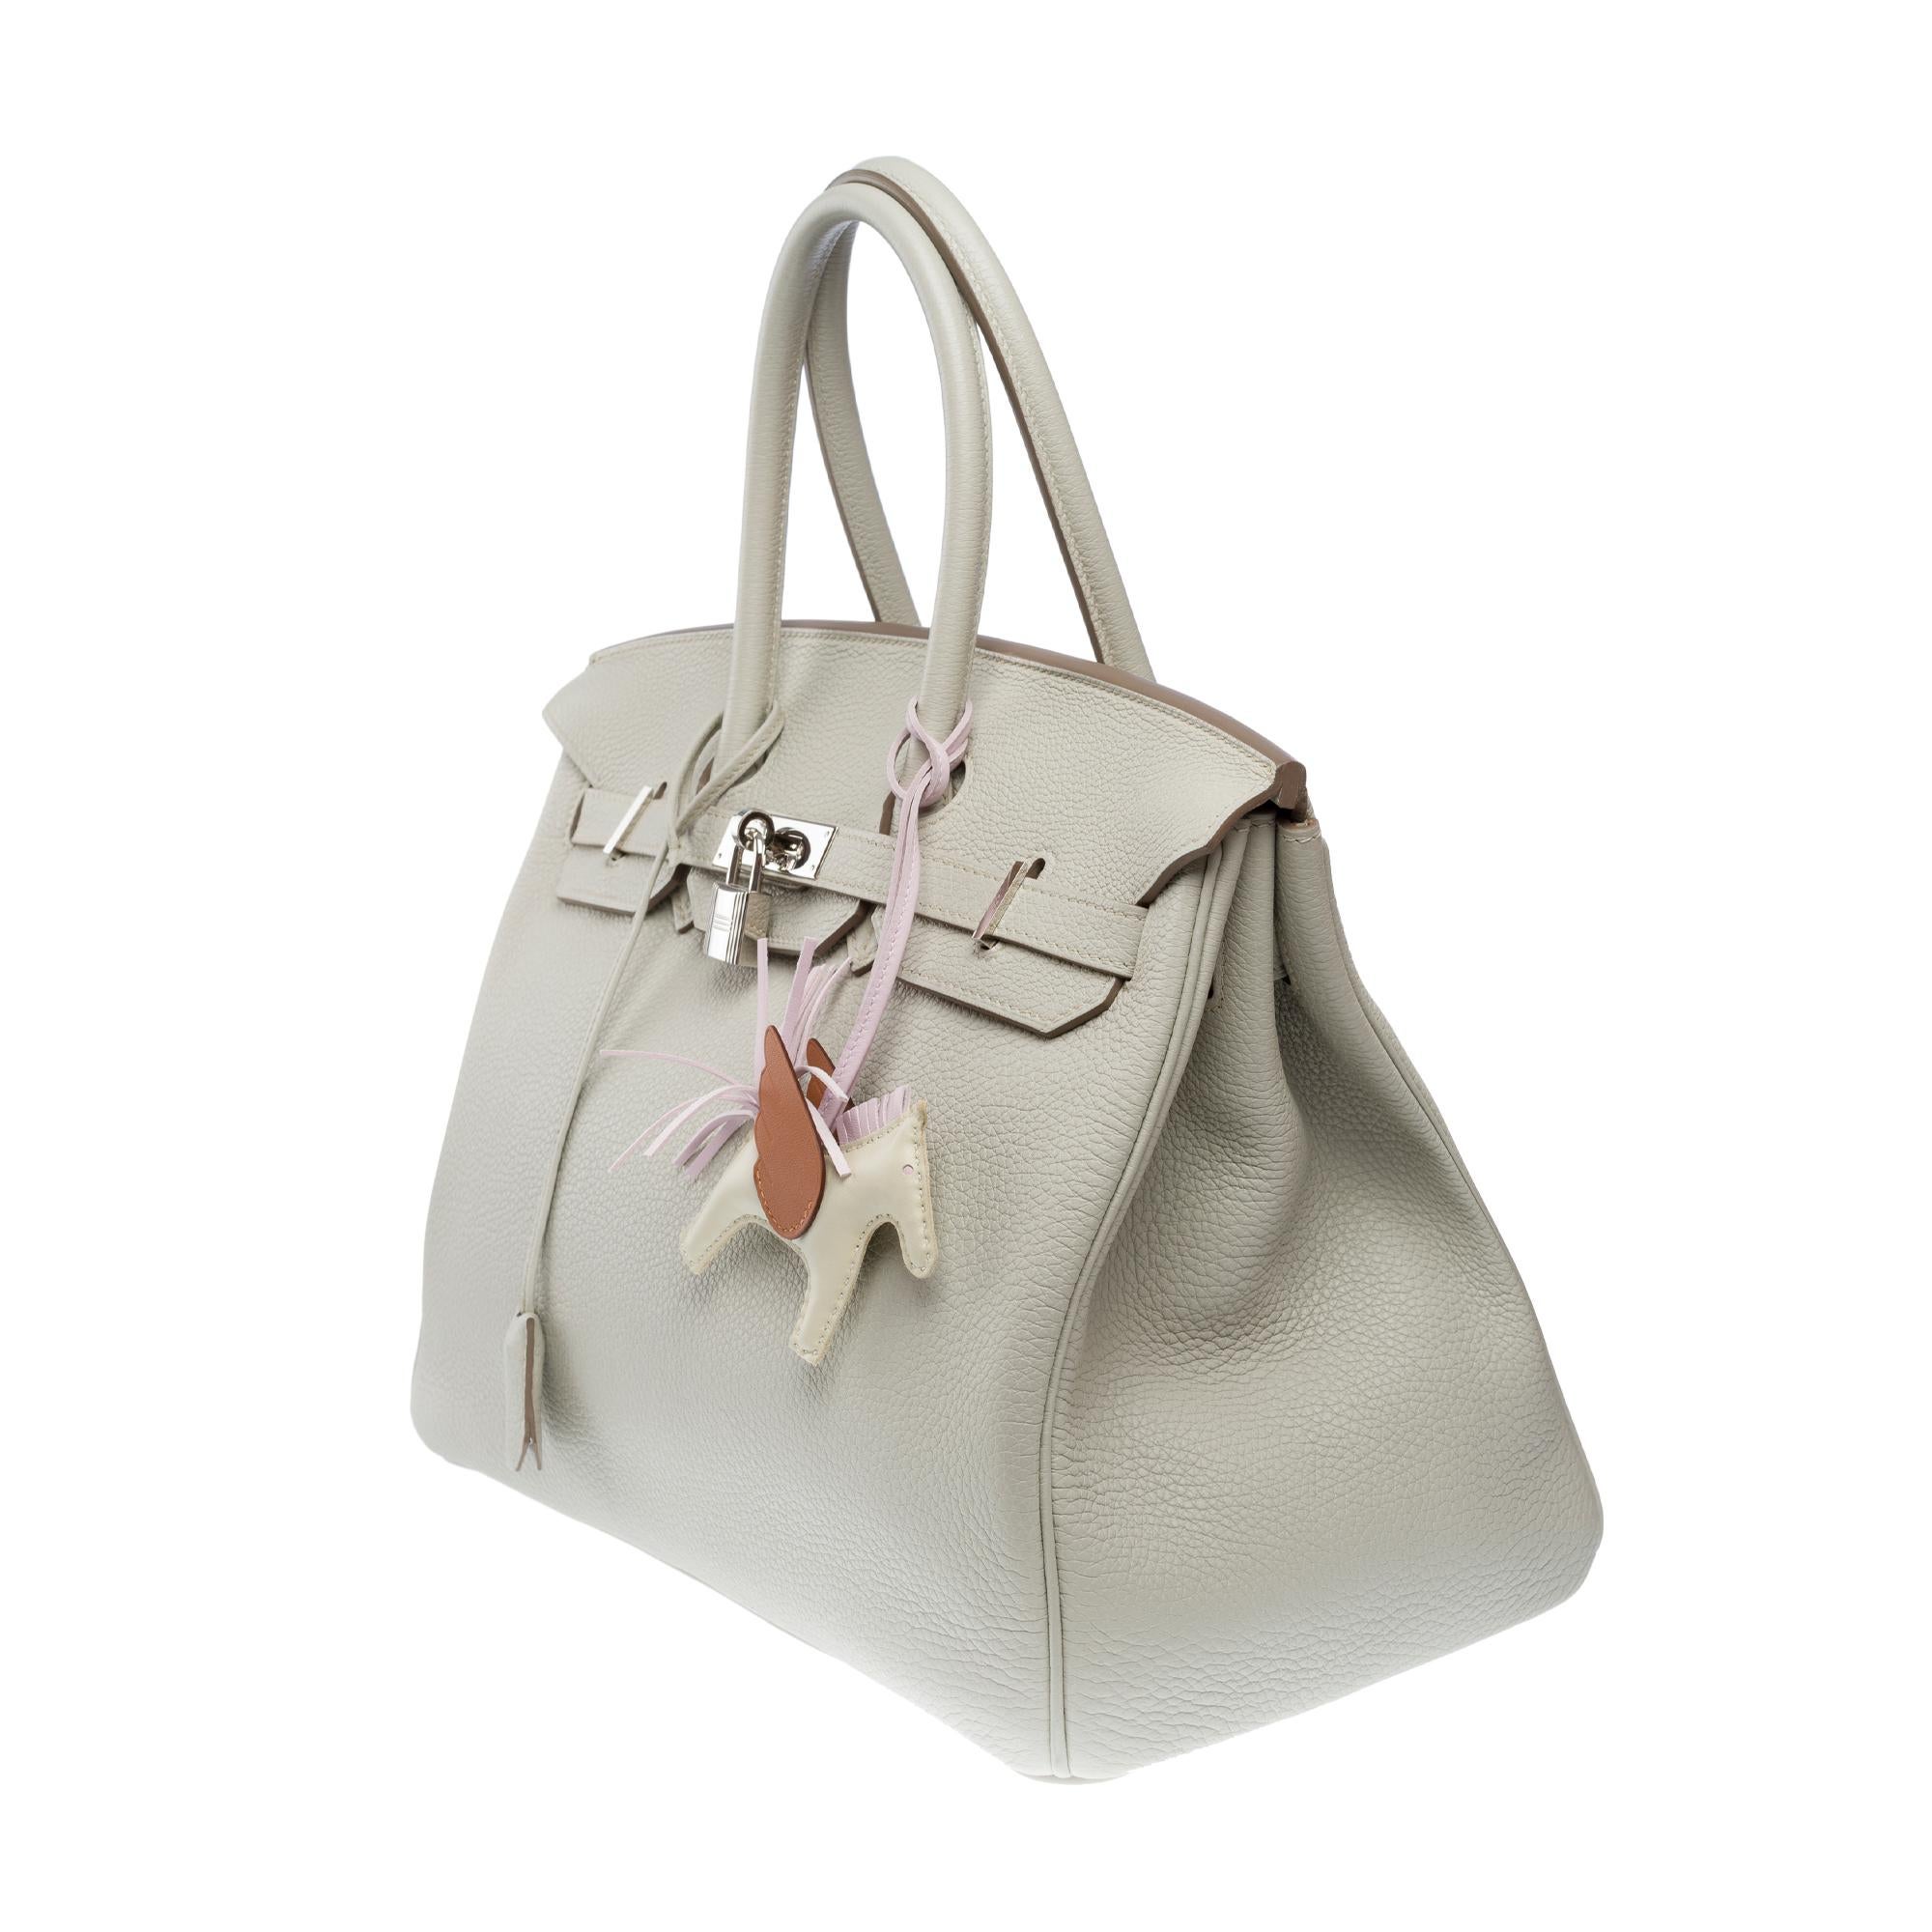 Amazing Hermès Birkin 35 handbag in Gris Perle Togo Calf leather, SHW For Sale 2